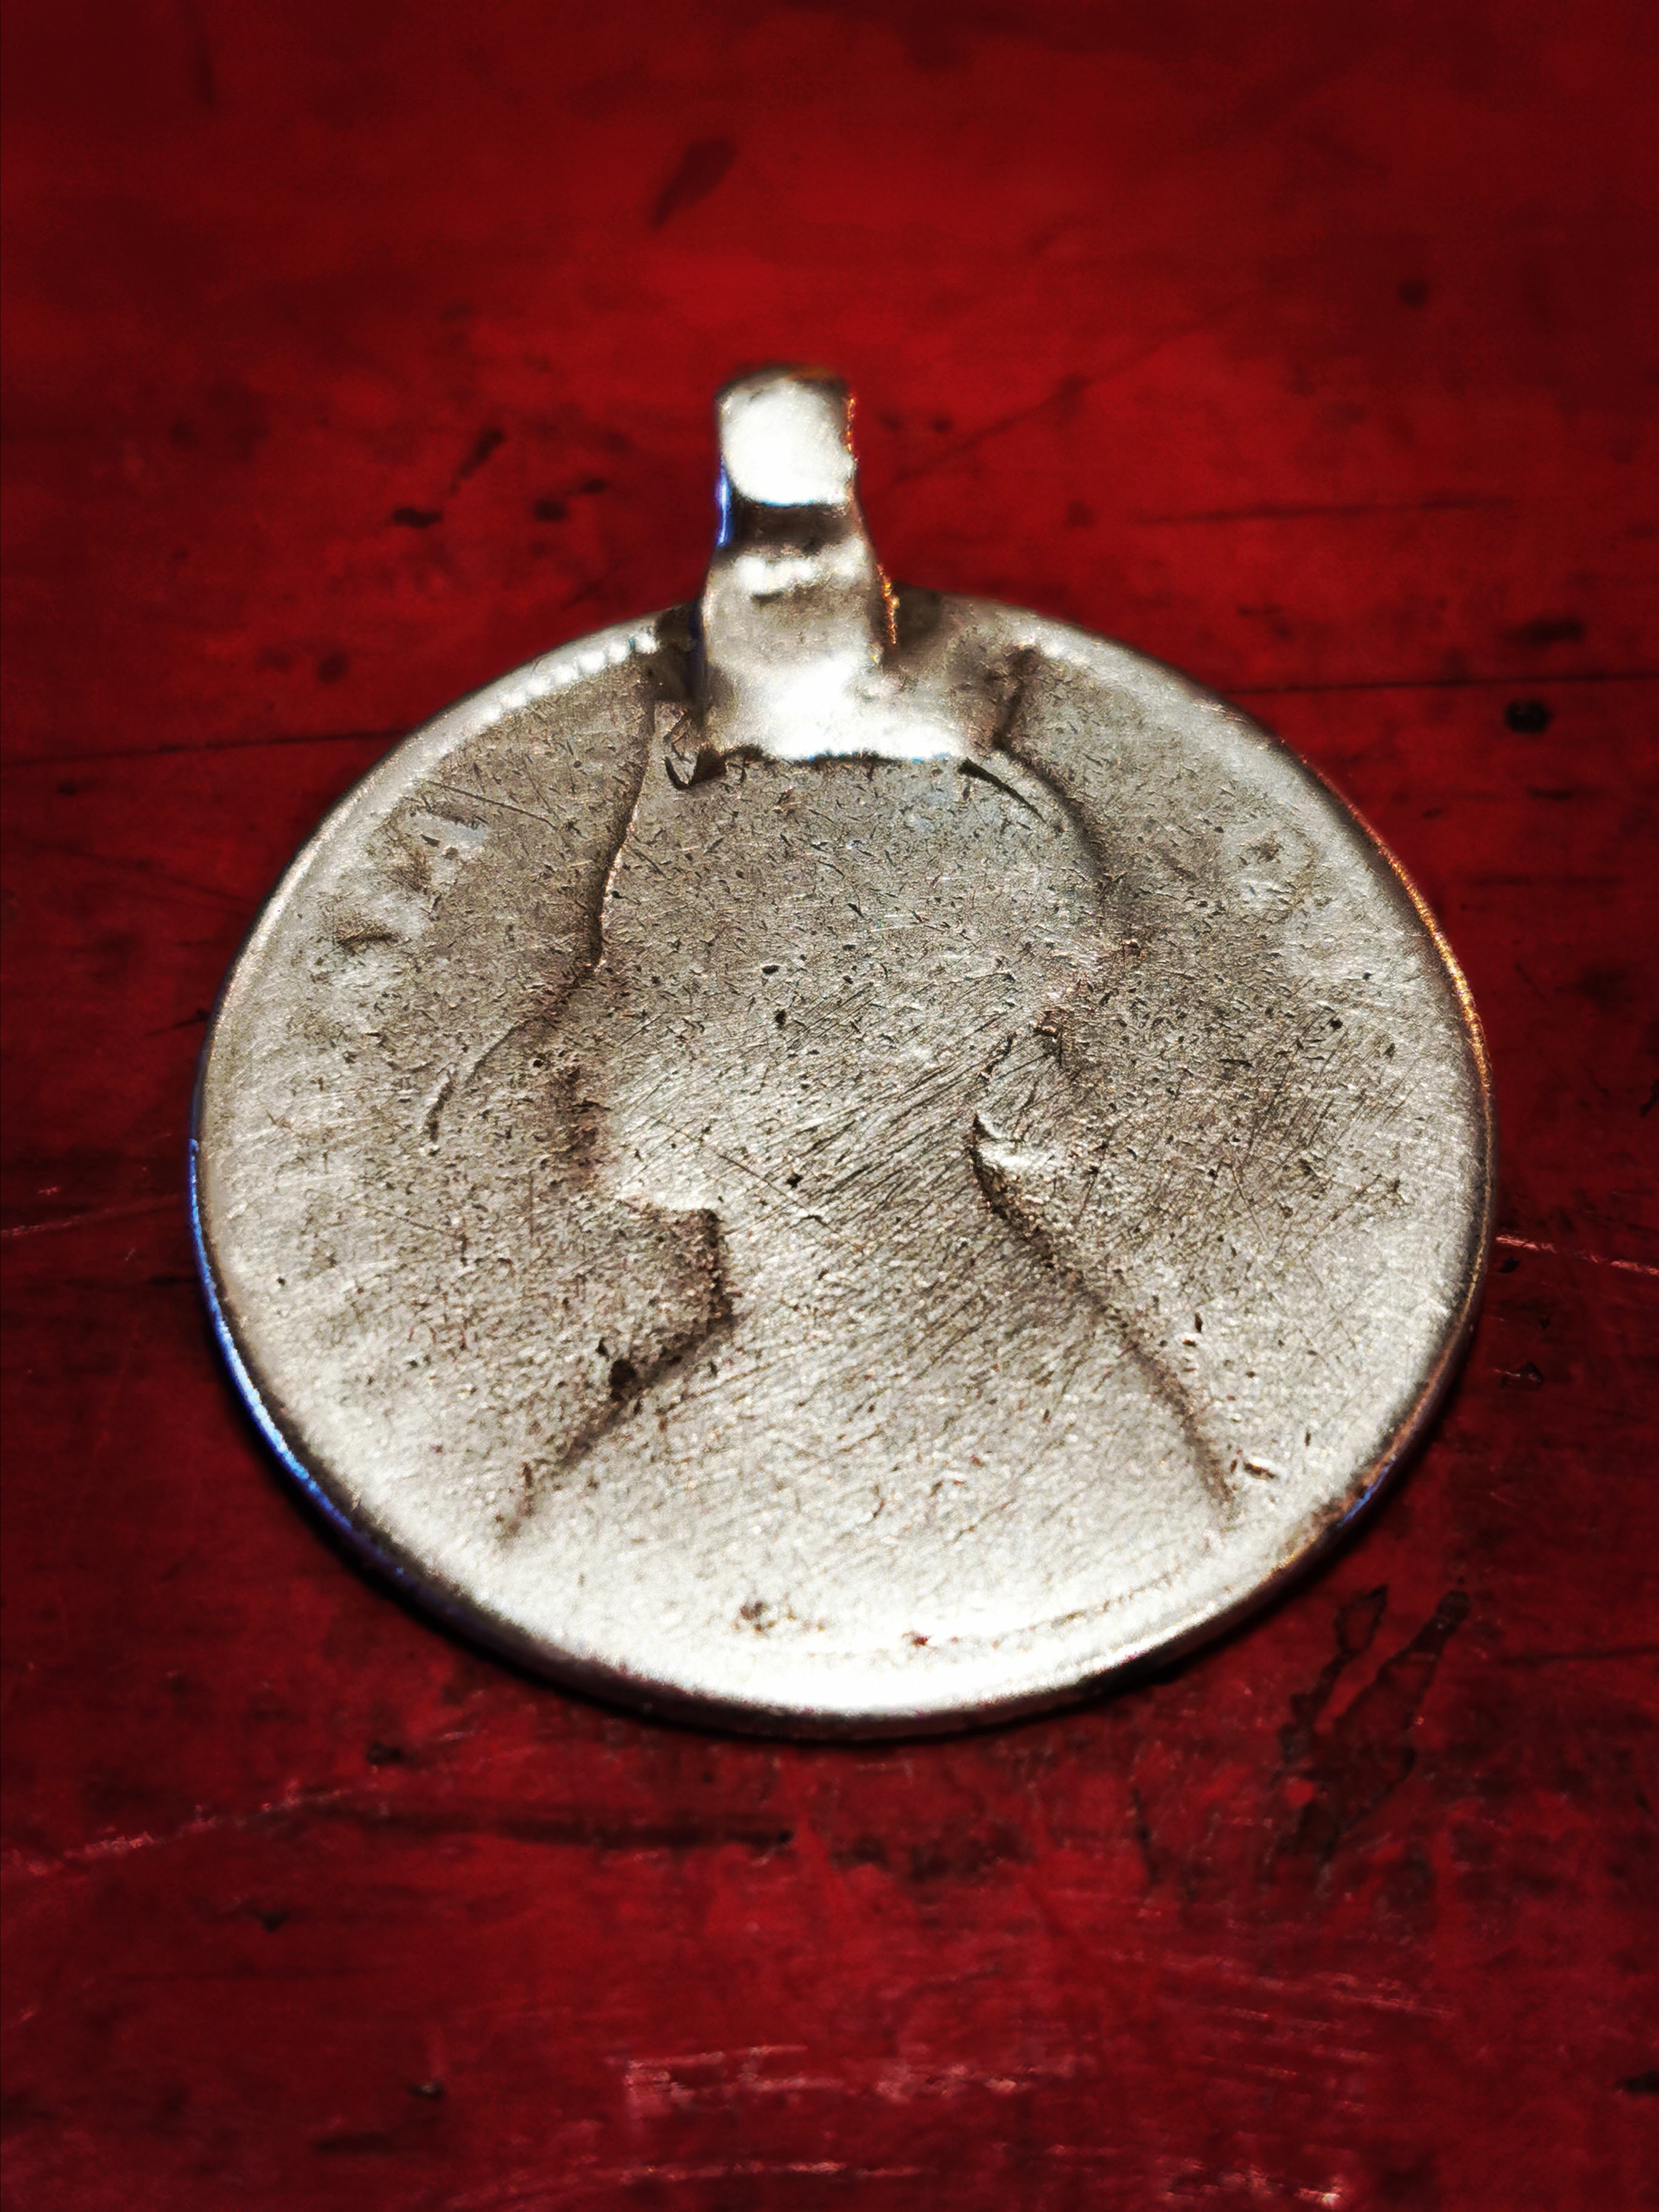 Antique Indian silver rupee pendants